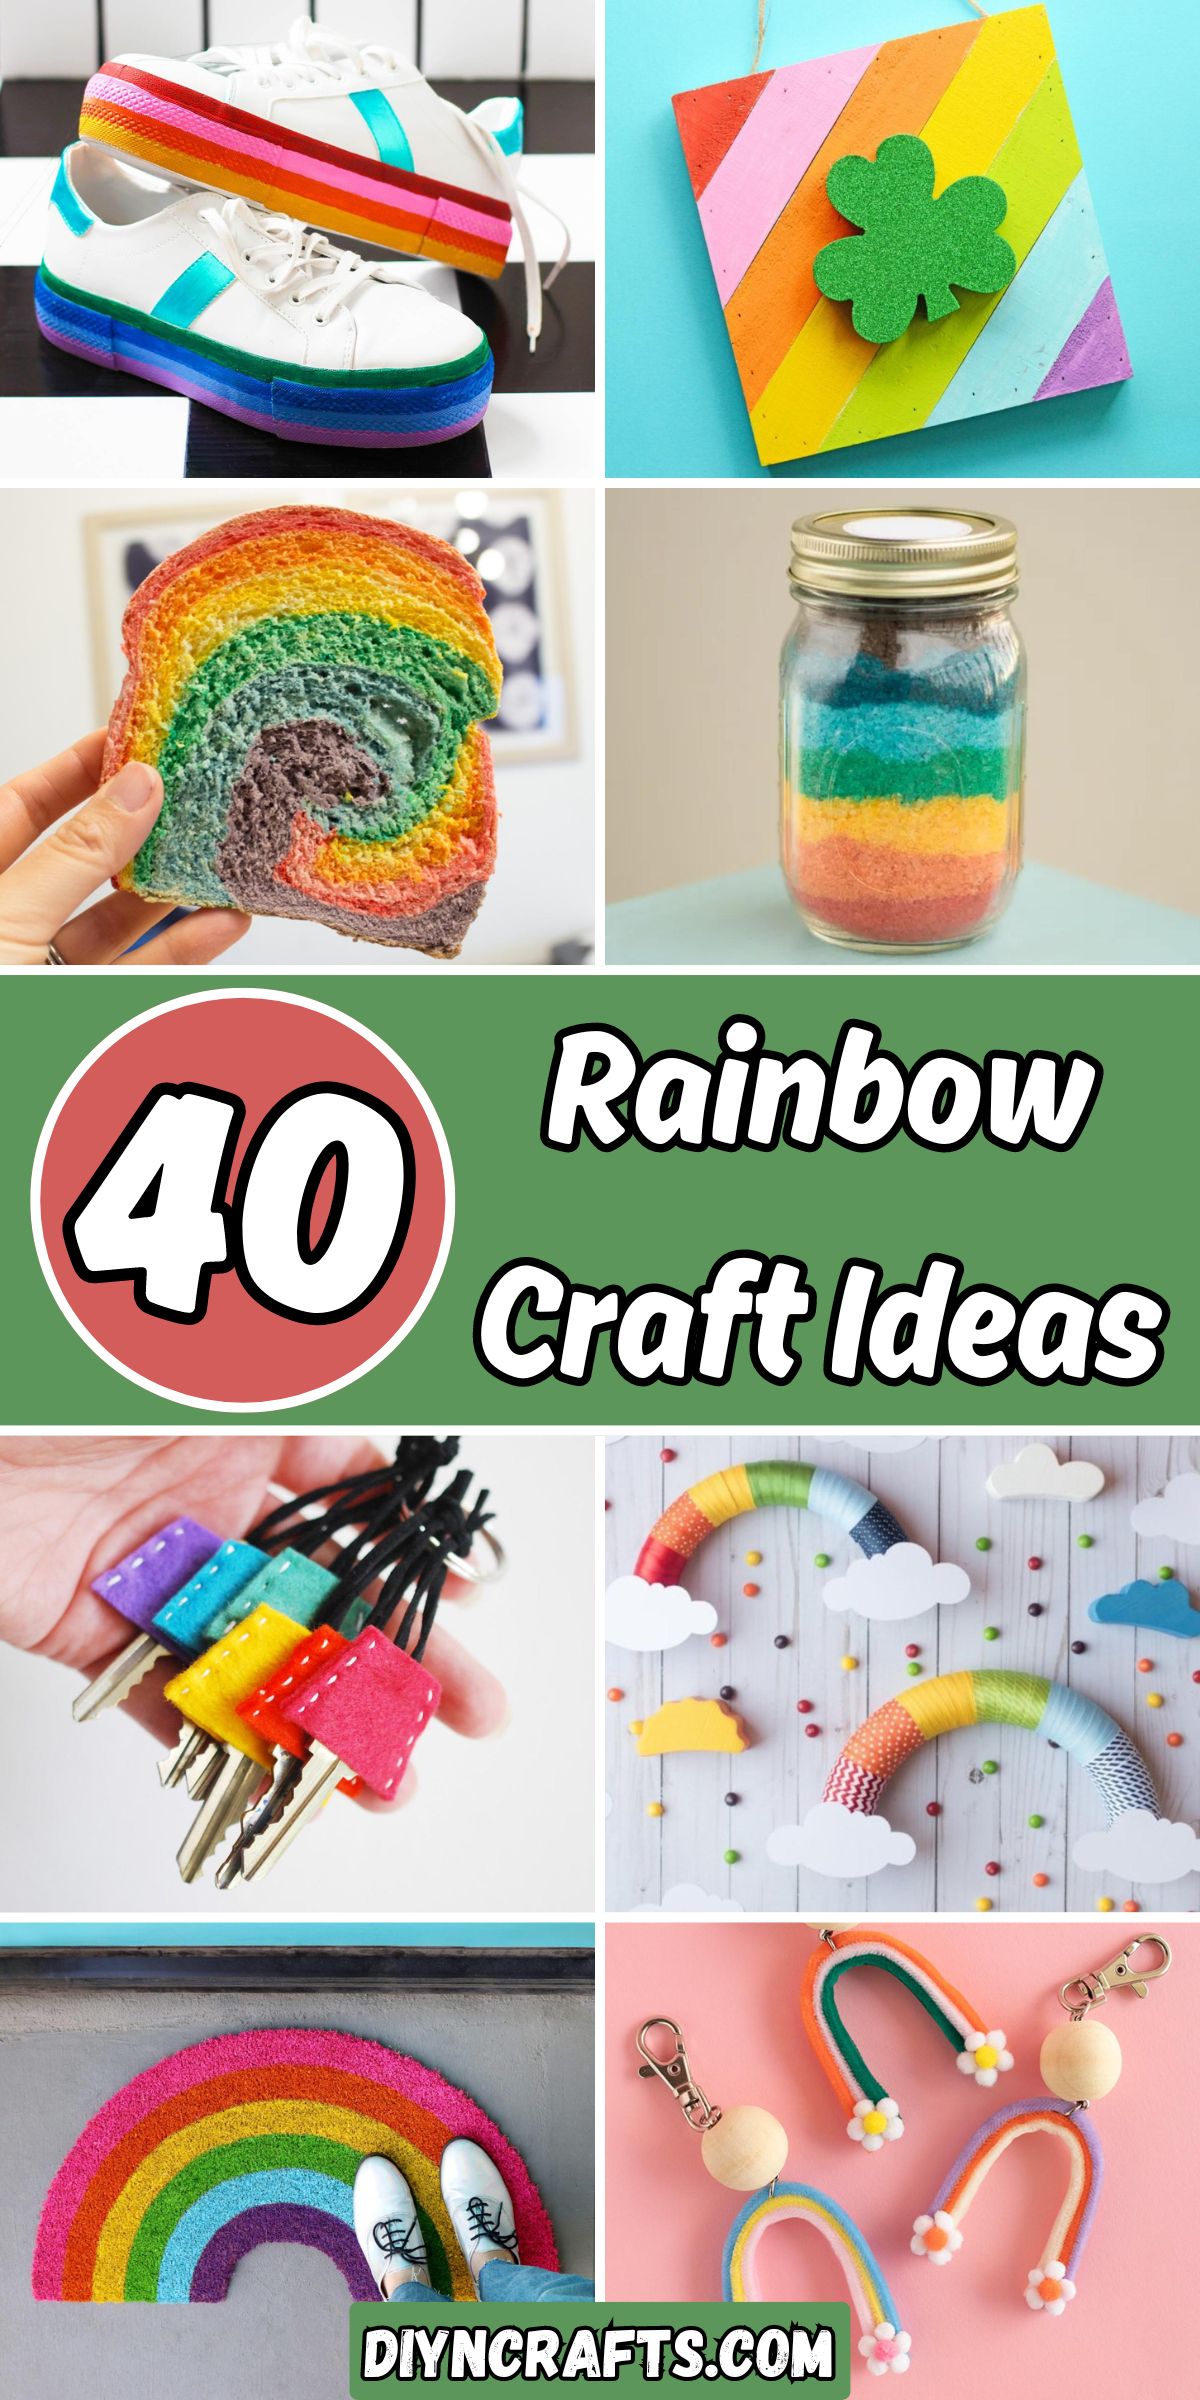 40 Rainbow Craft Ideas collage.